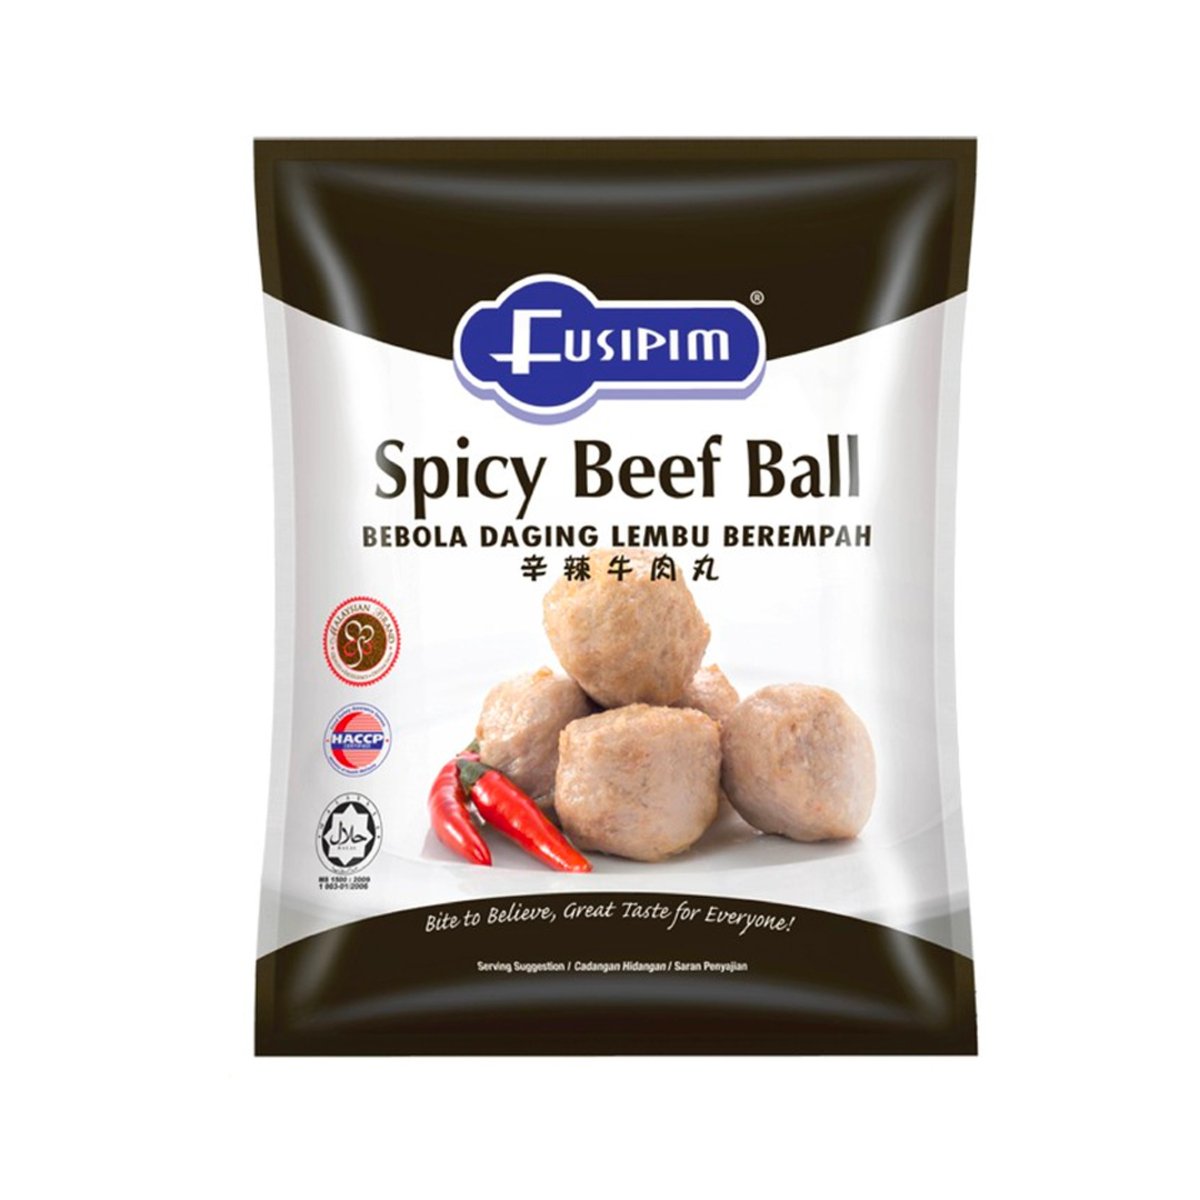 Fusipim Spicy Beef Ball 500g